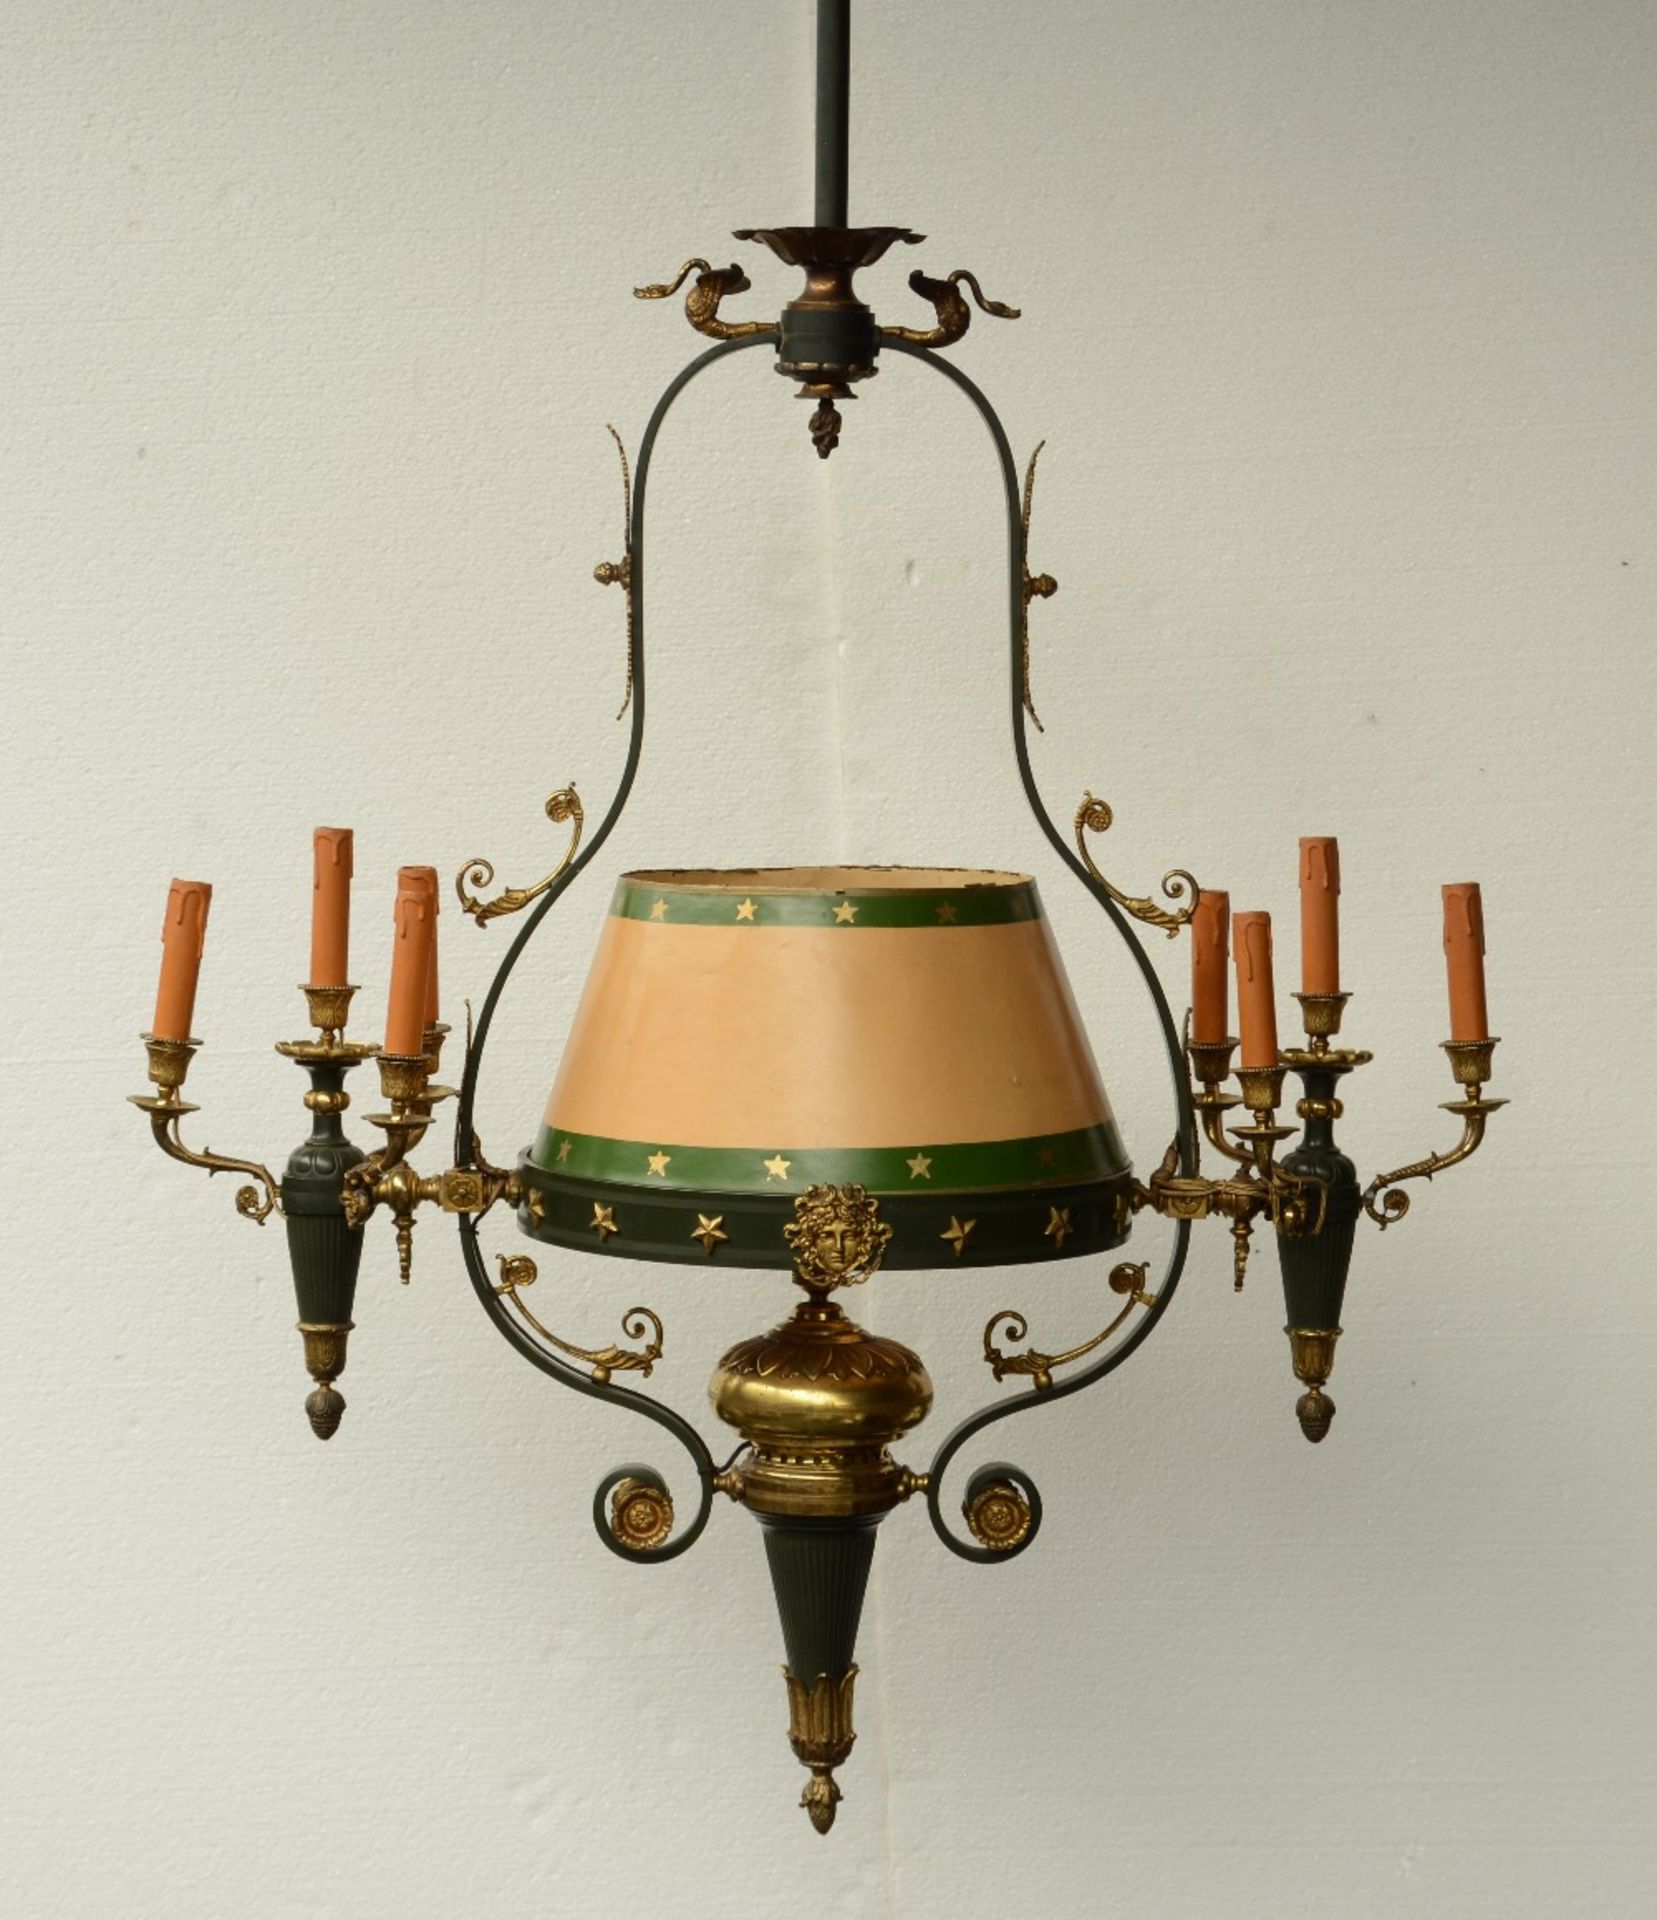 An Empire style chandelier, polychrome, gilt brass and bronze, 19thC, H 170 - Diameter 95 cm (